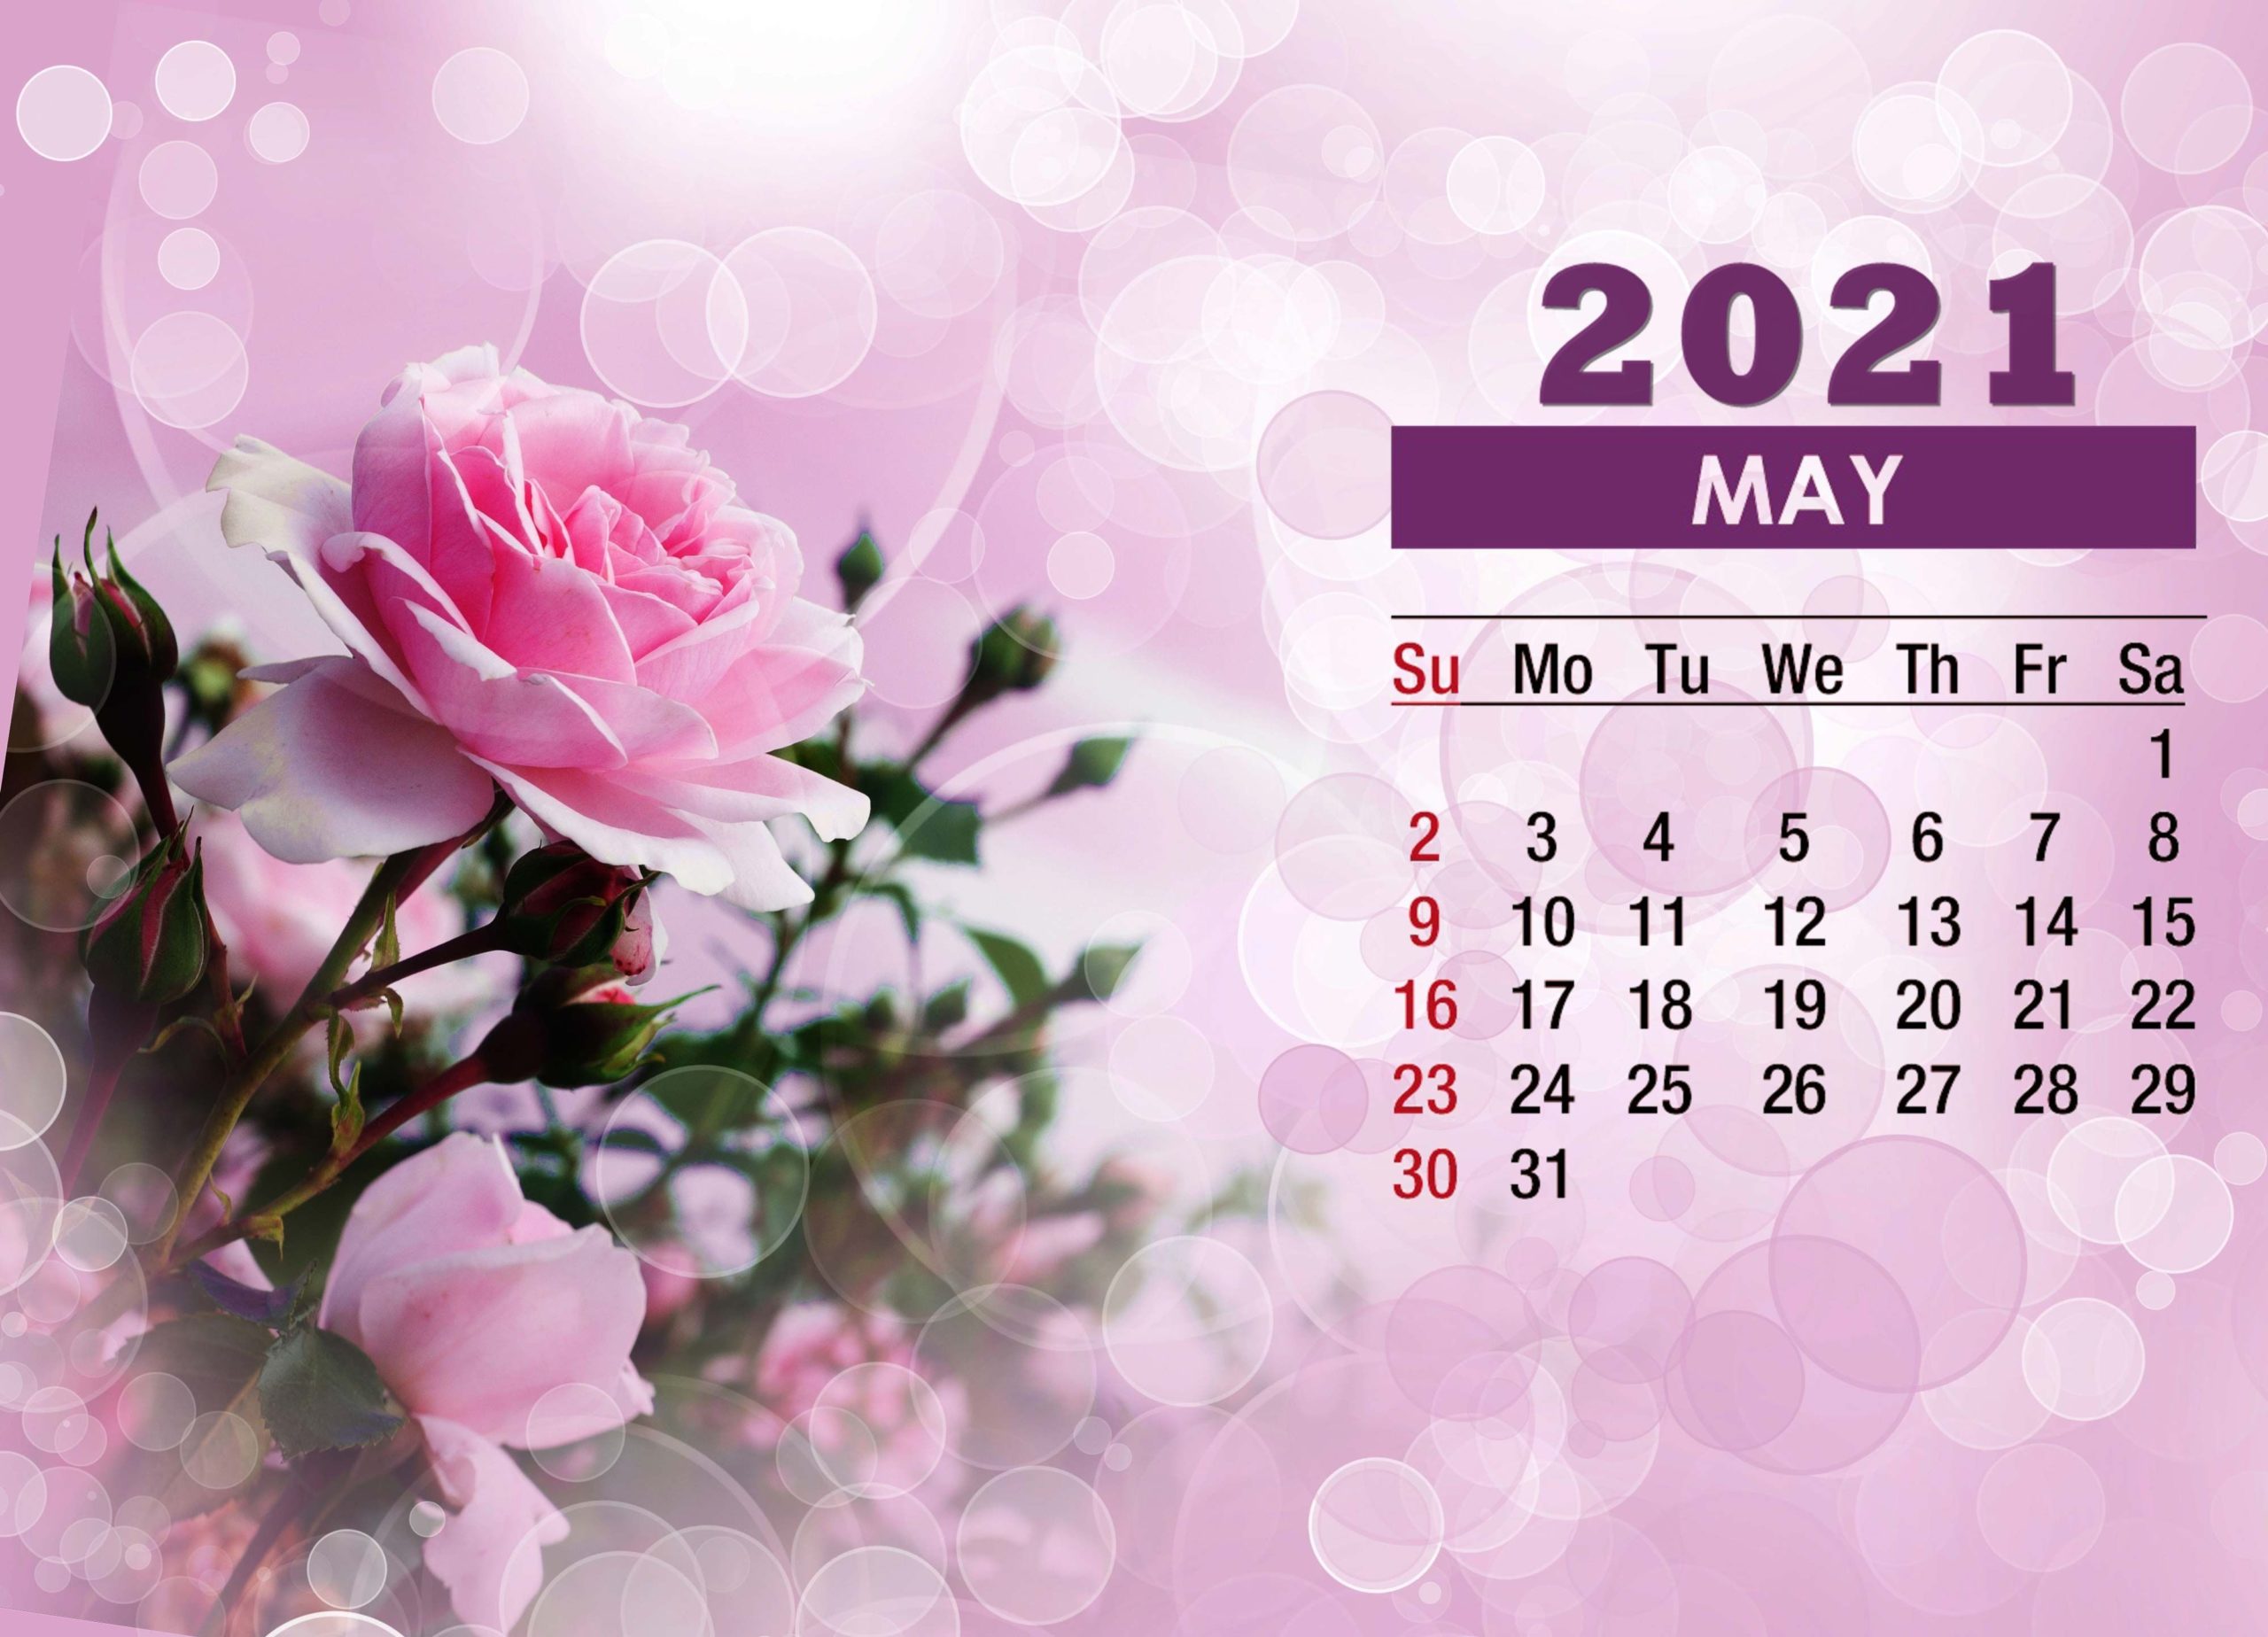 may 2021 calendar with holidays usa